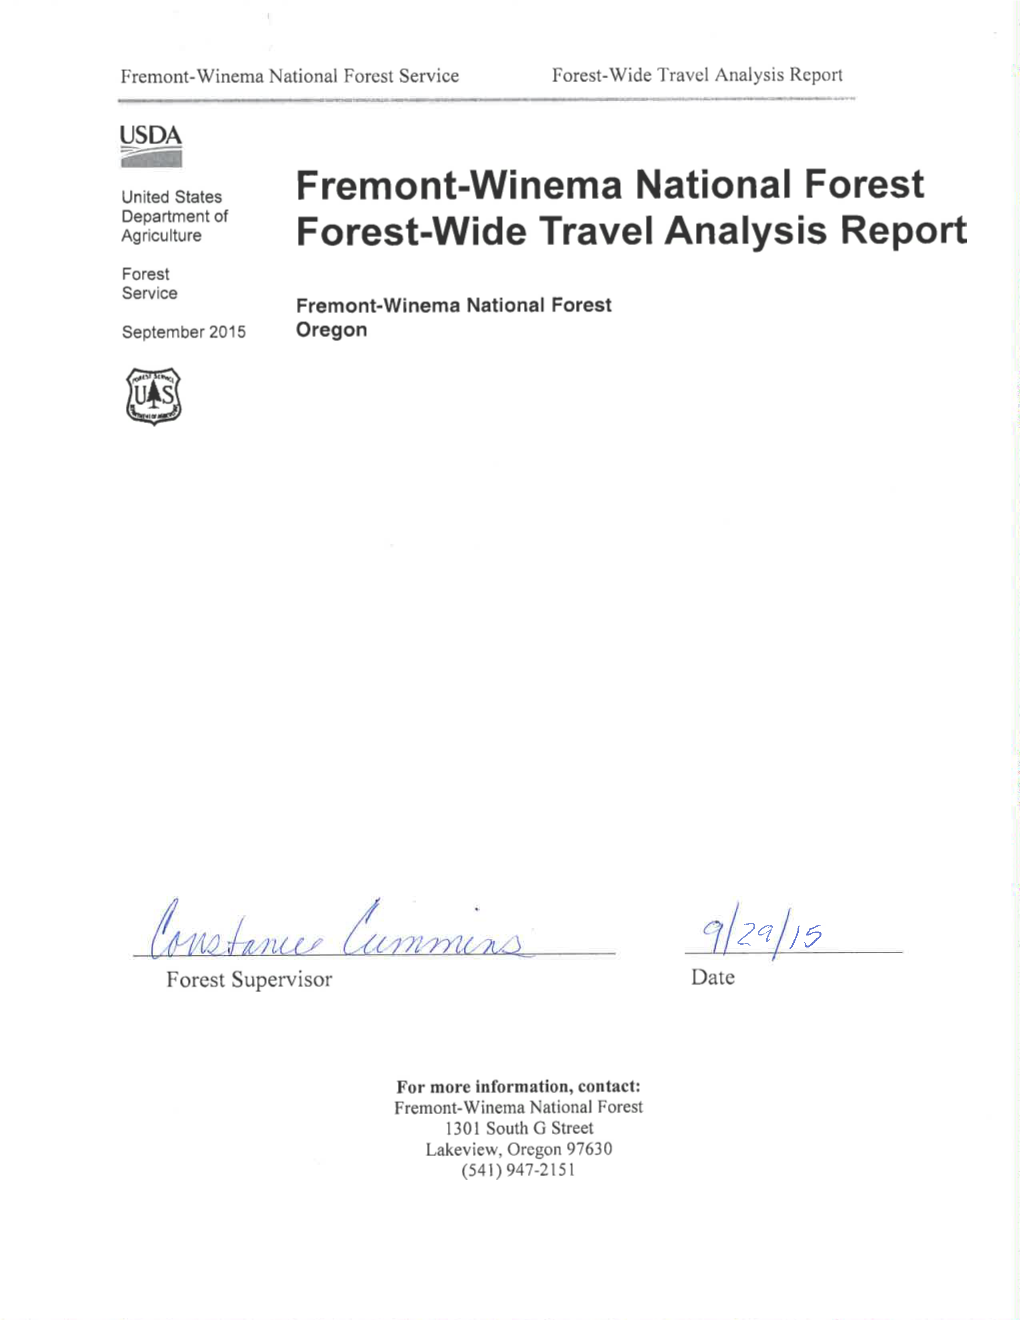 Fremont-Winema National Forest Travel